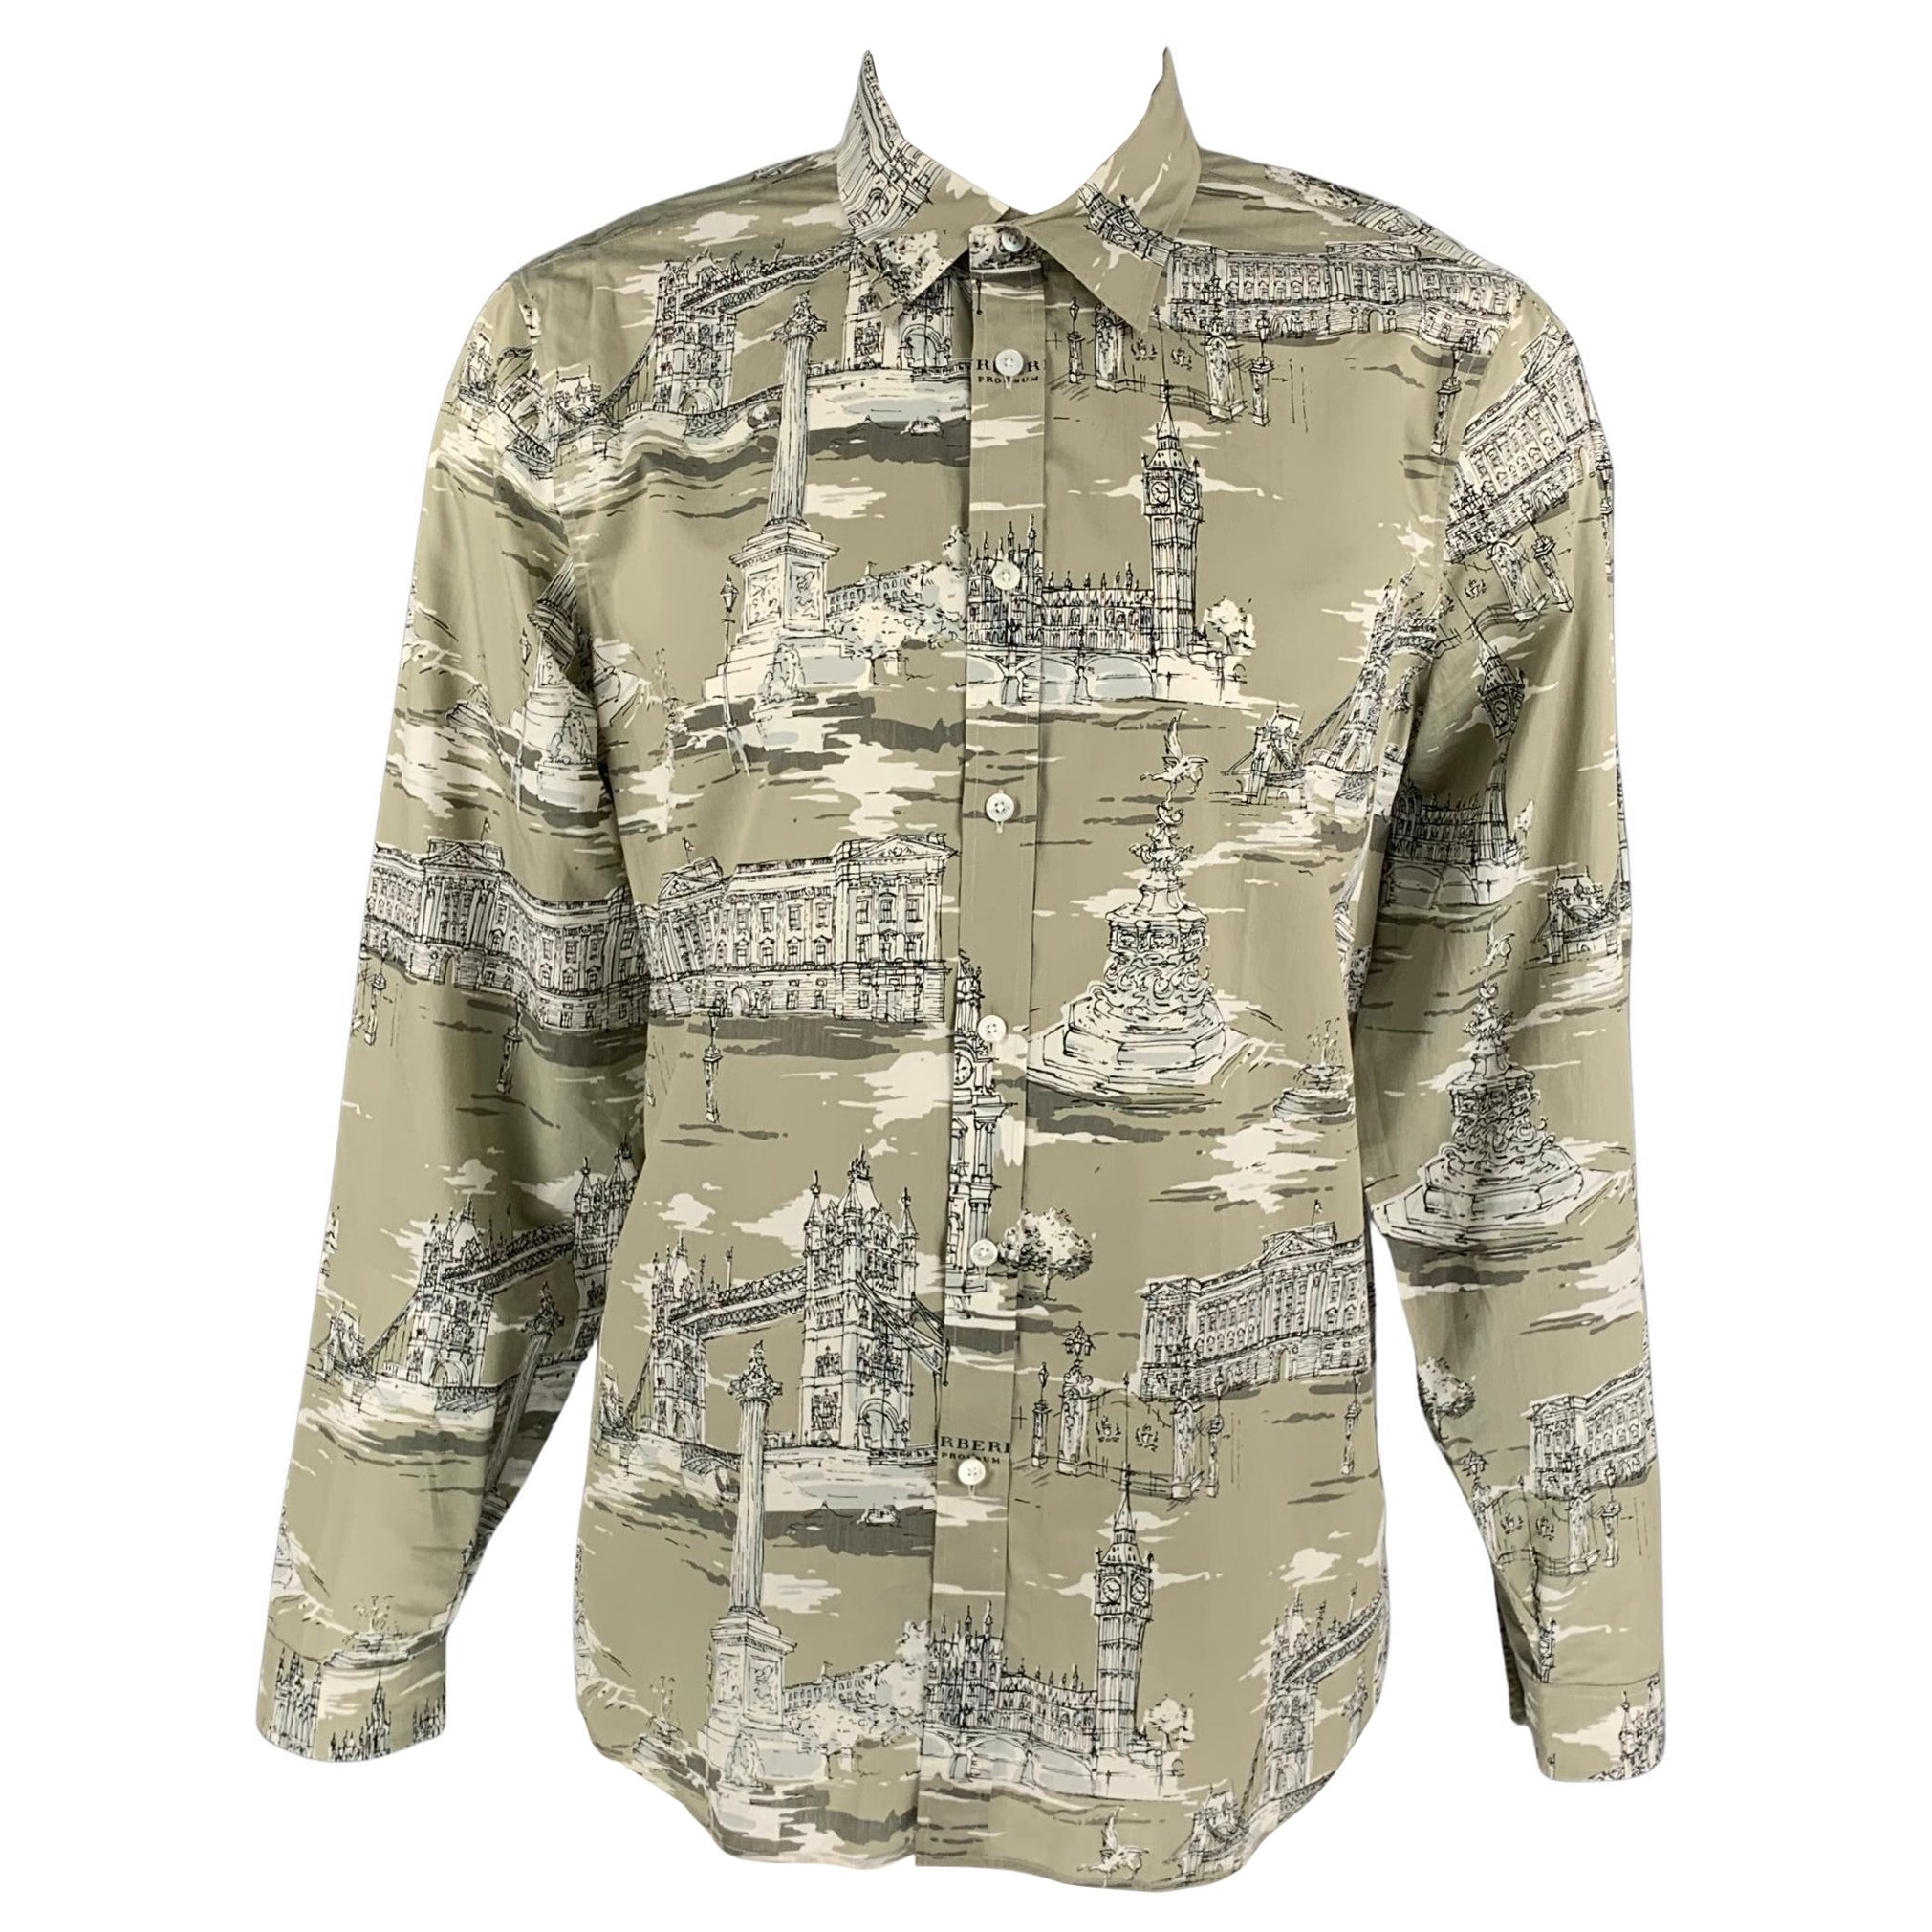 BURBERRY PRORSUM Fall 2014 Size XL Taupe & Beige London Landmark Print Shirt